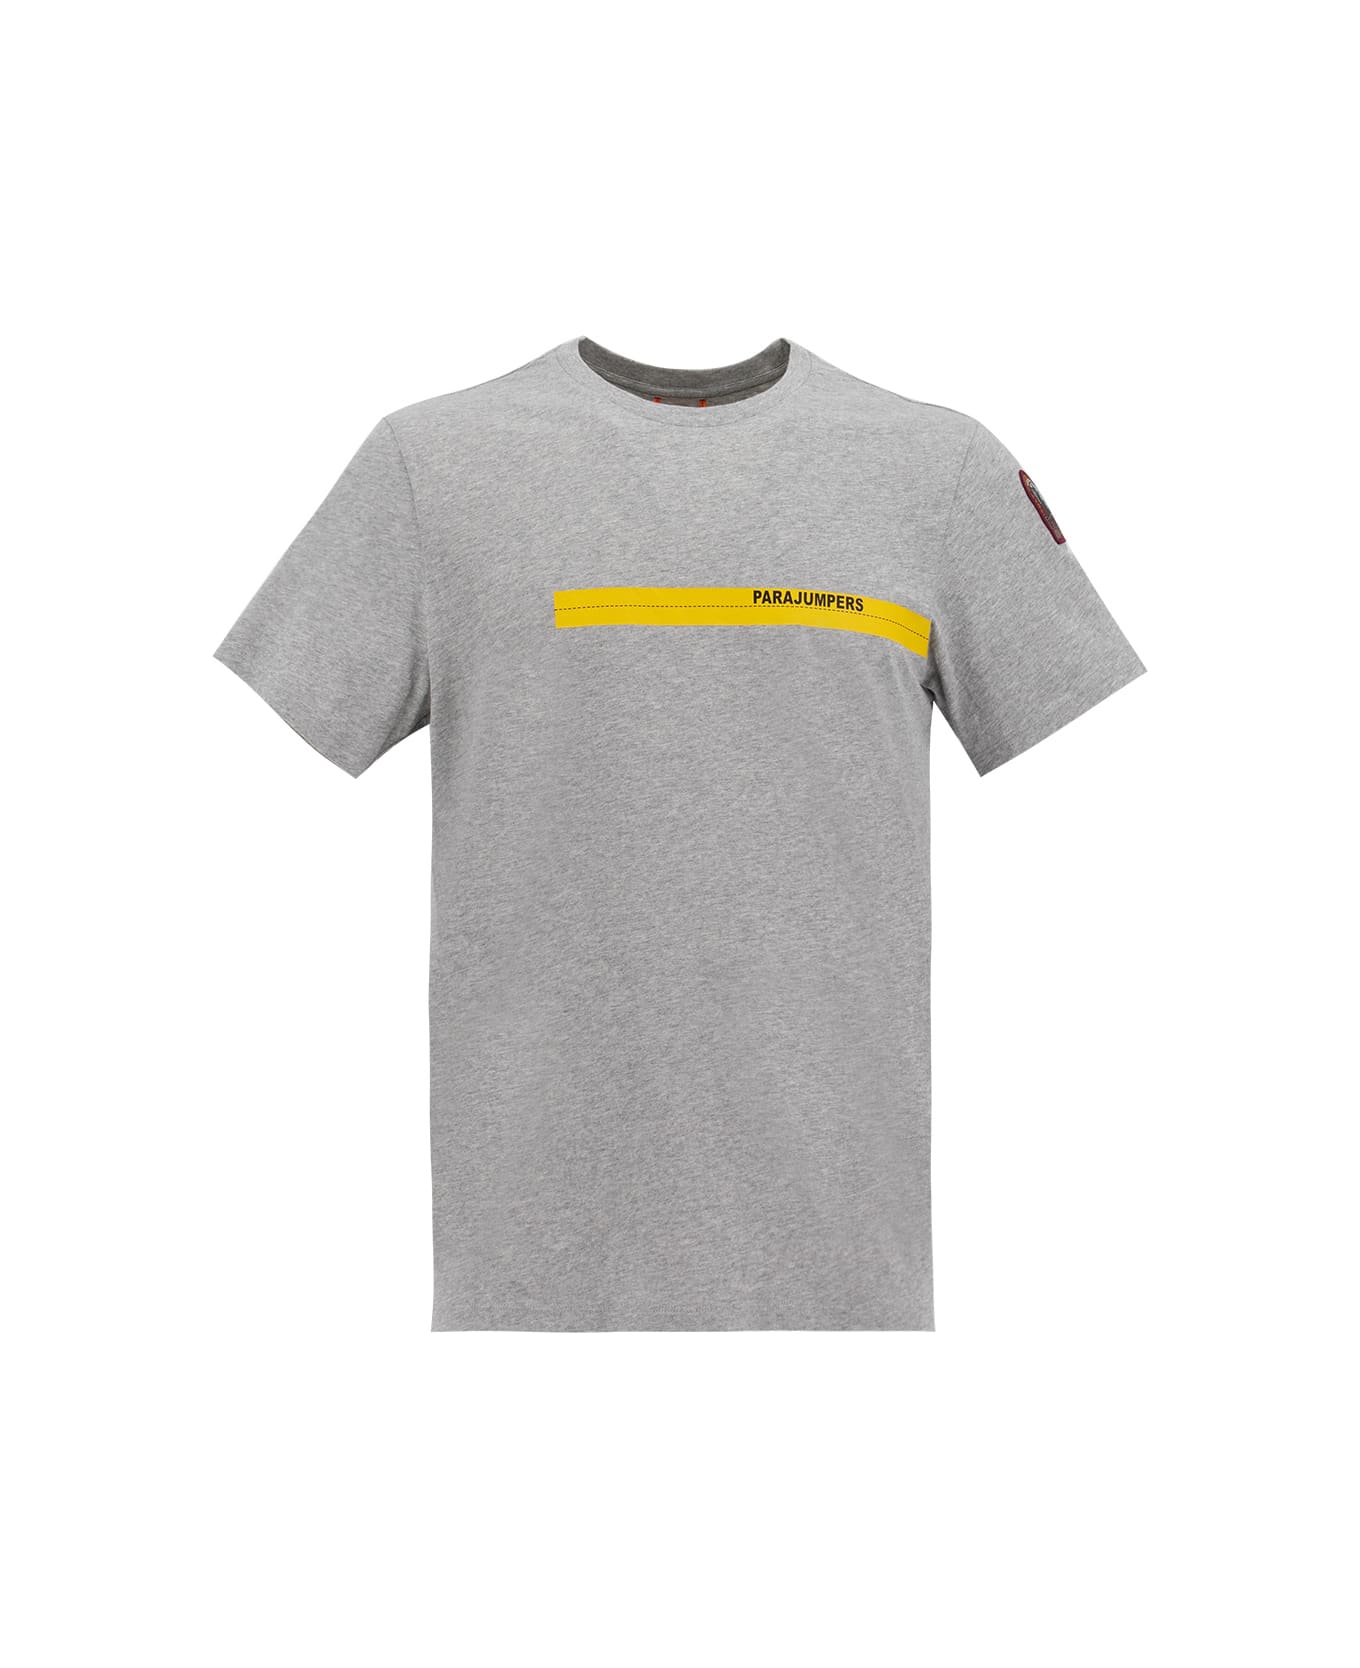 Parajumpers T-shirt - SILVER MELANGE Tシャツ